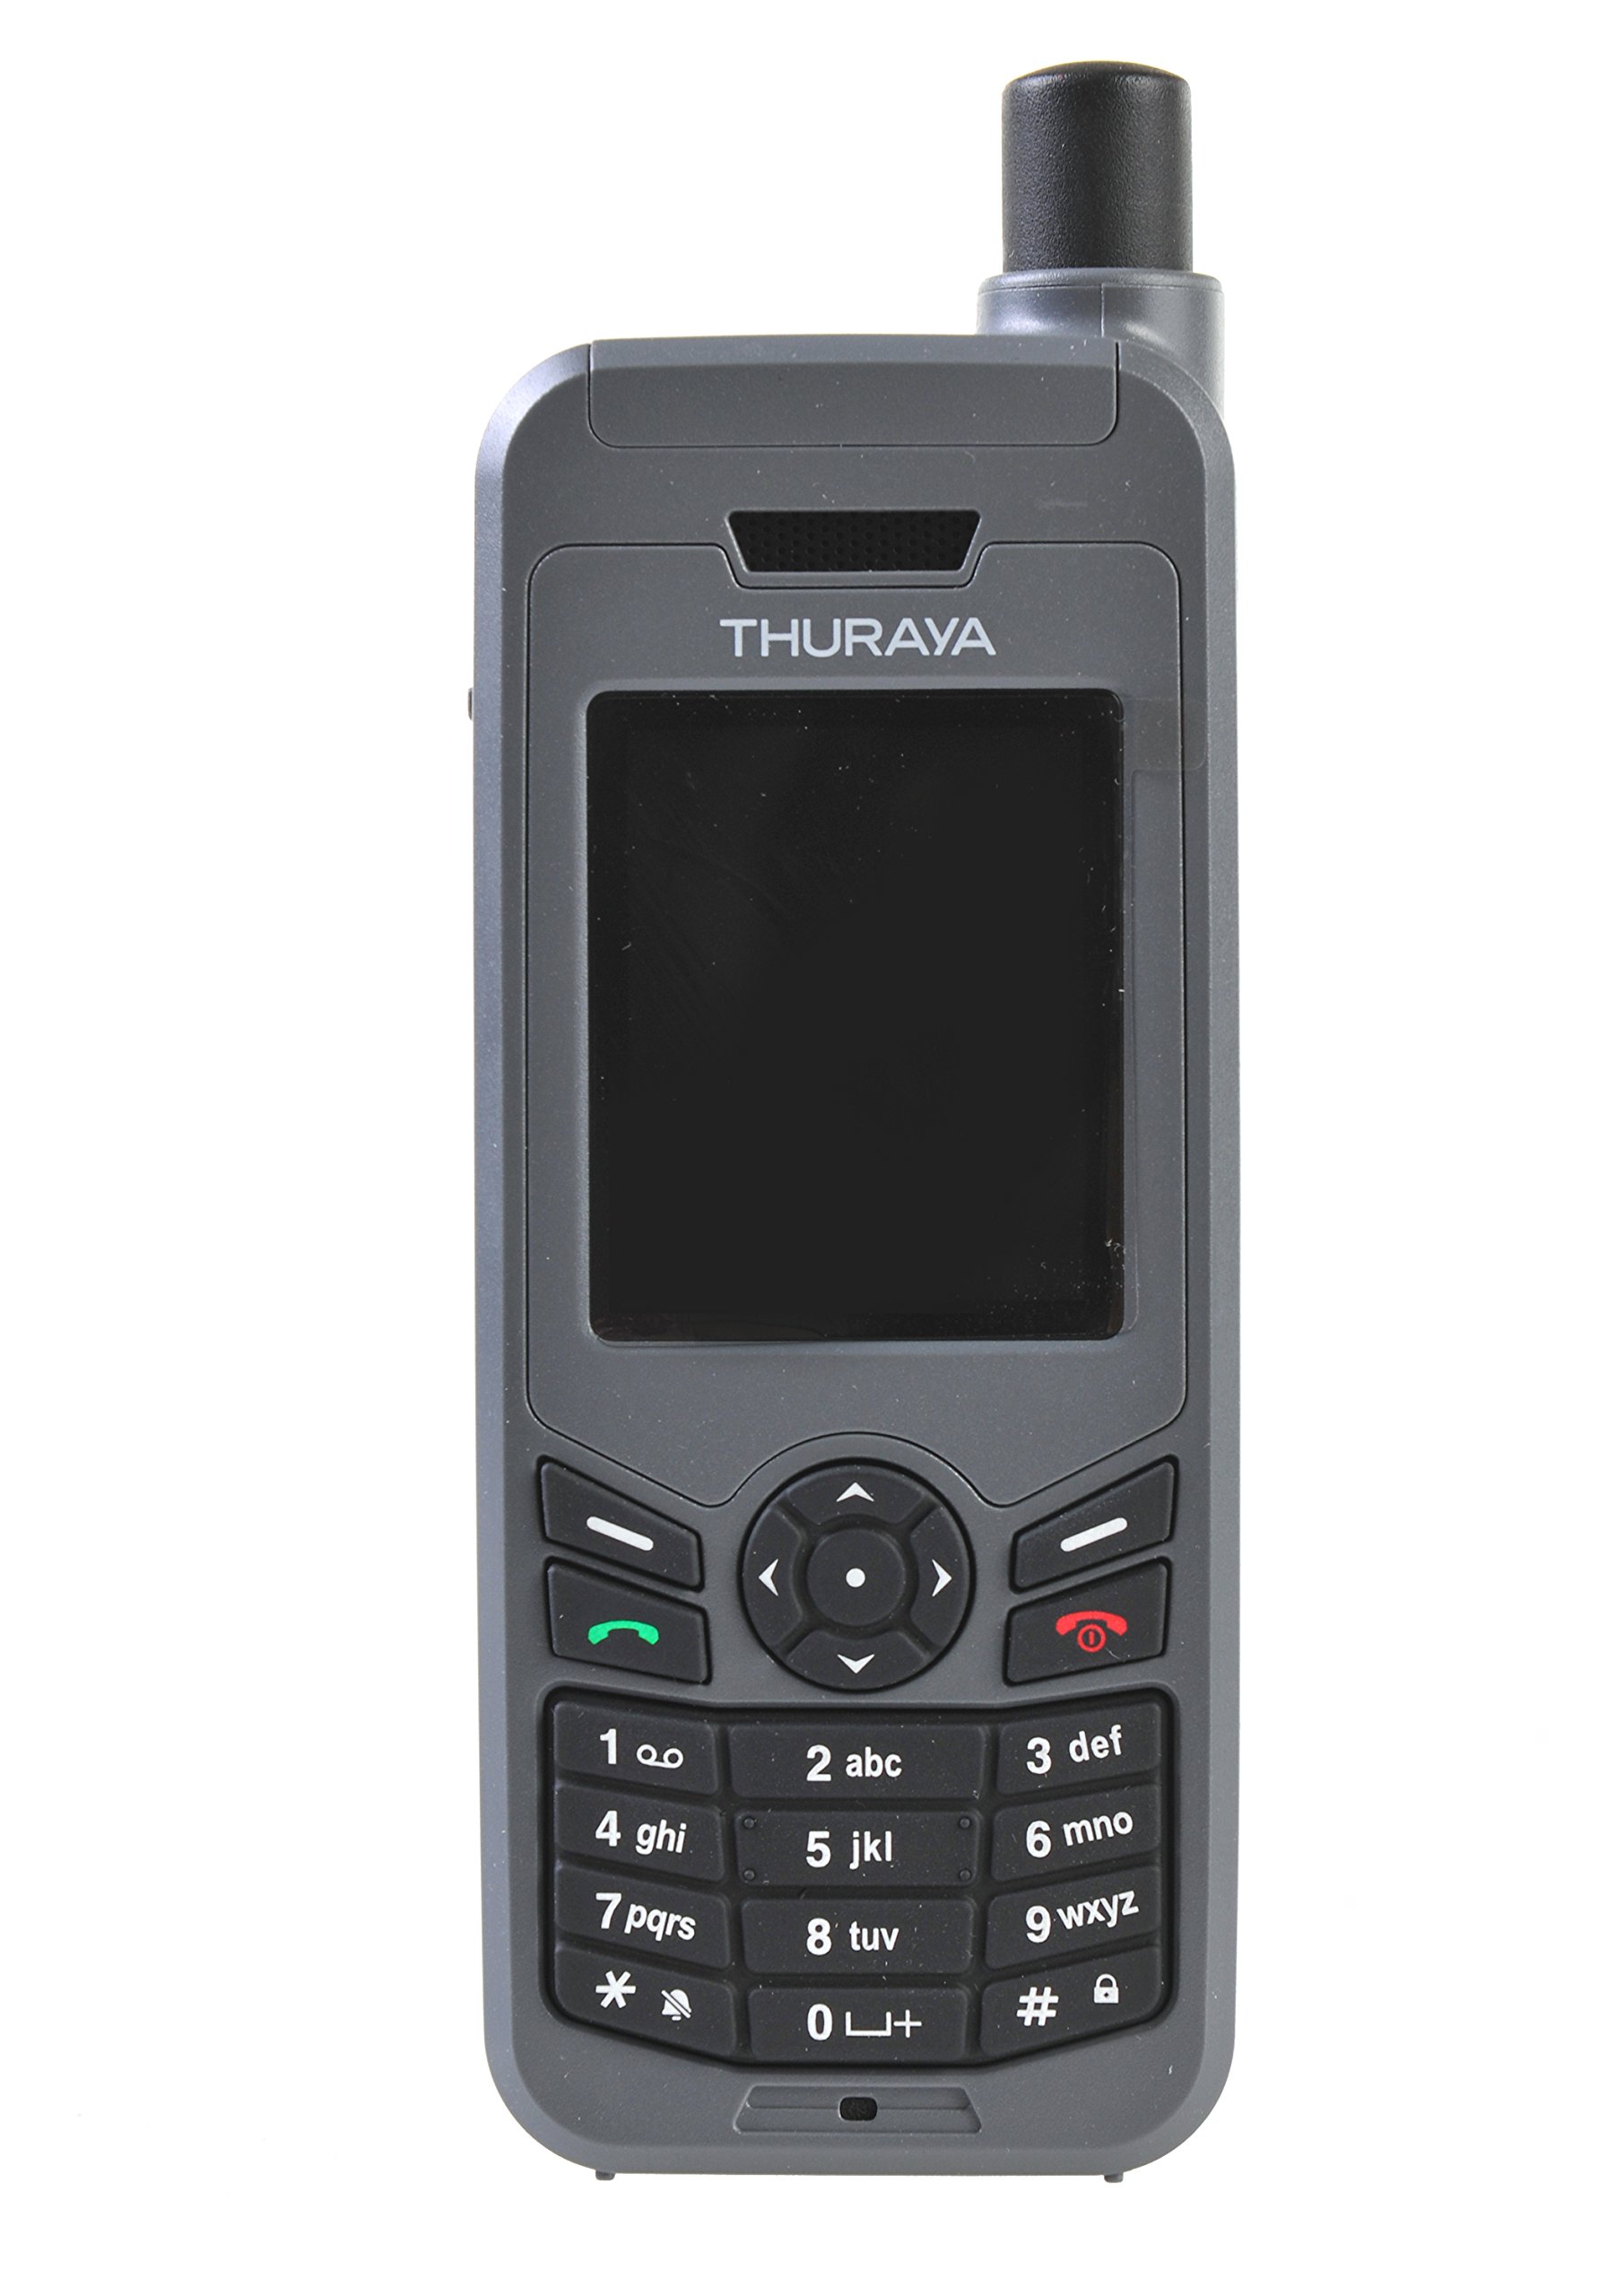 OSAT Thuraya XT-LITE Satellite Phone & NOVA SIM with 60 Units (70 Minutes) with 365 Day Validity